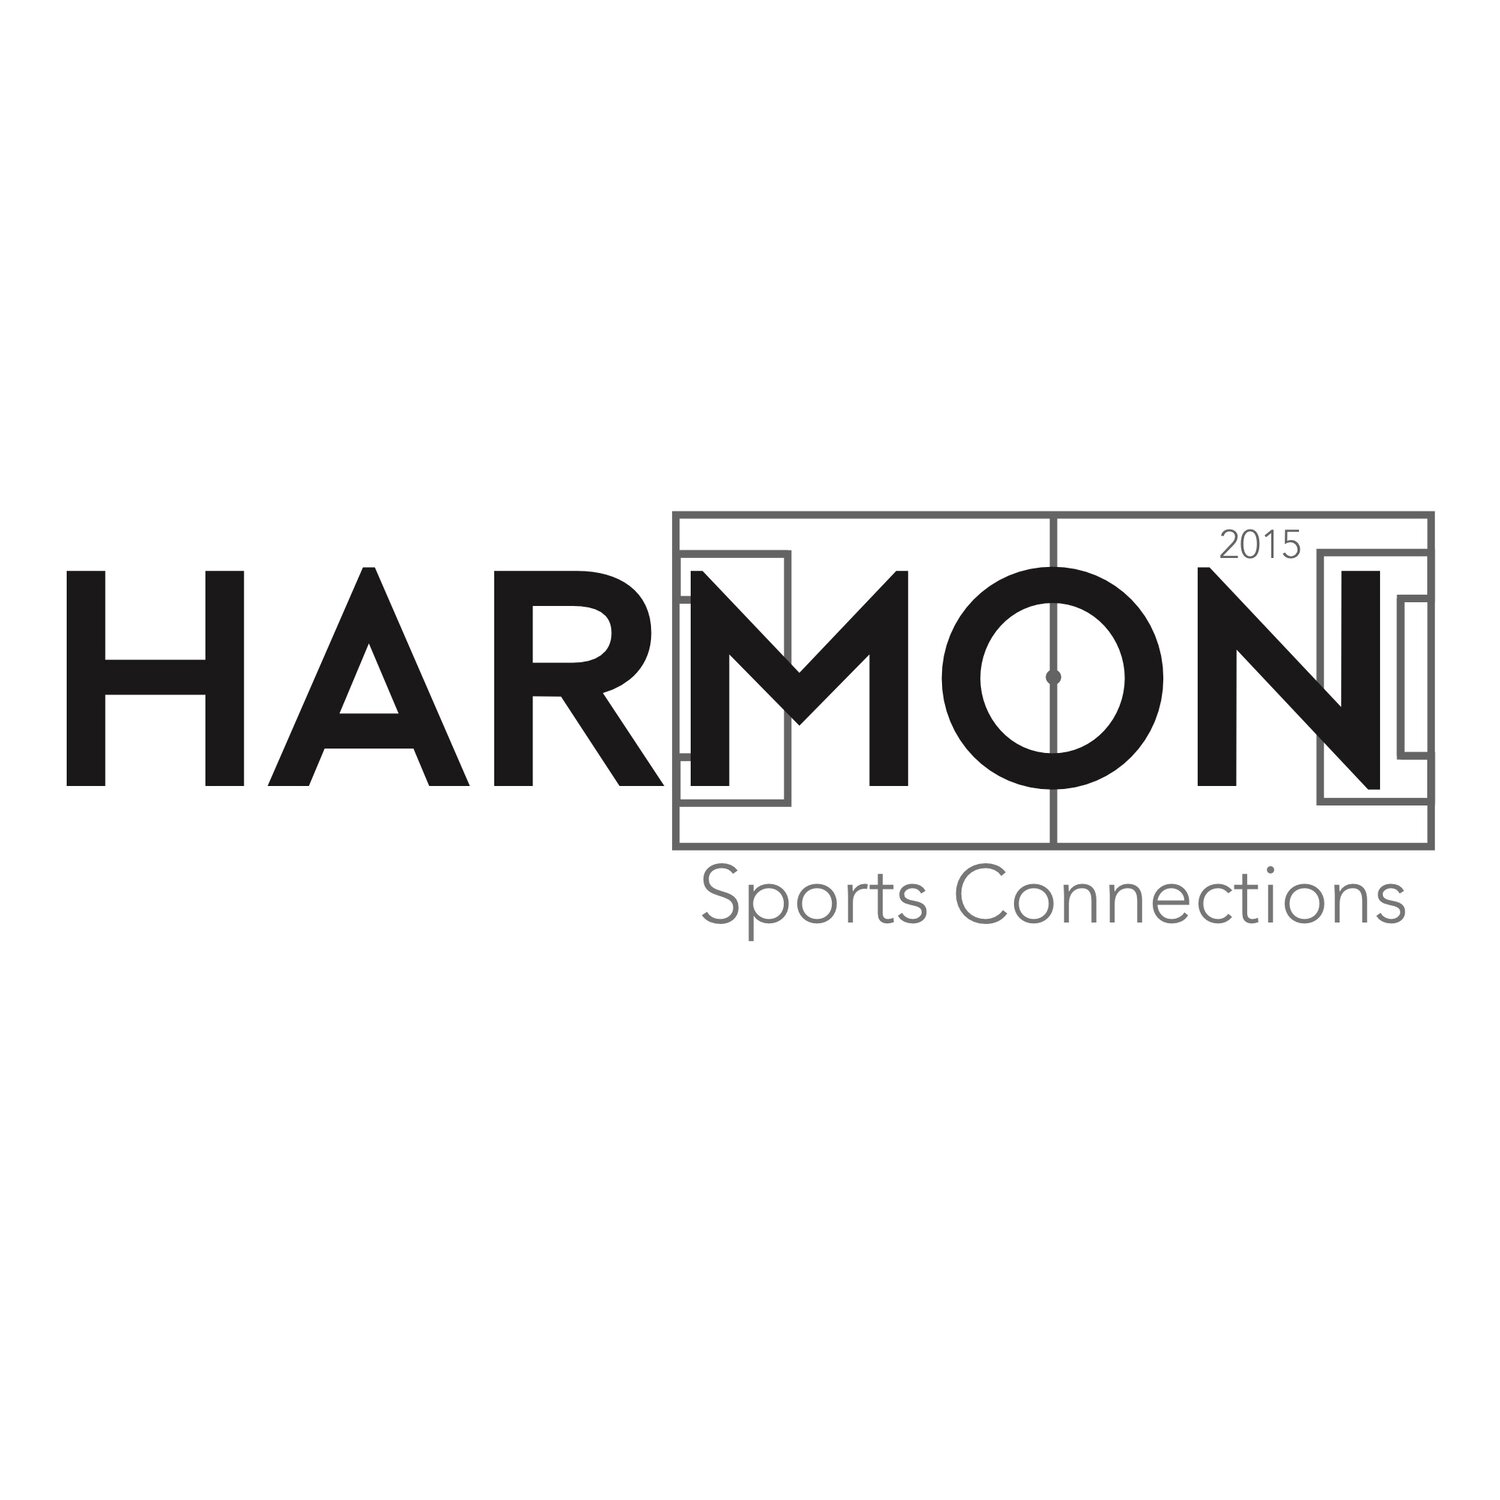 Harmon Sports Group